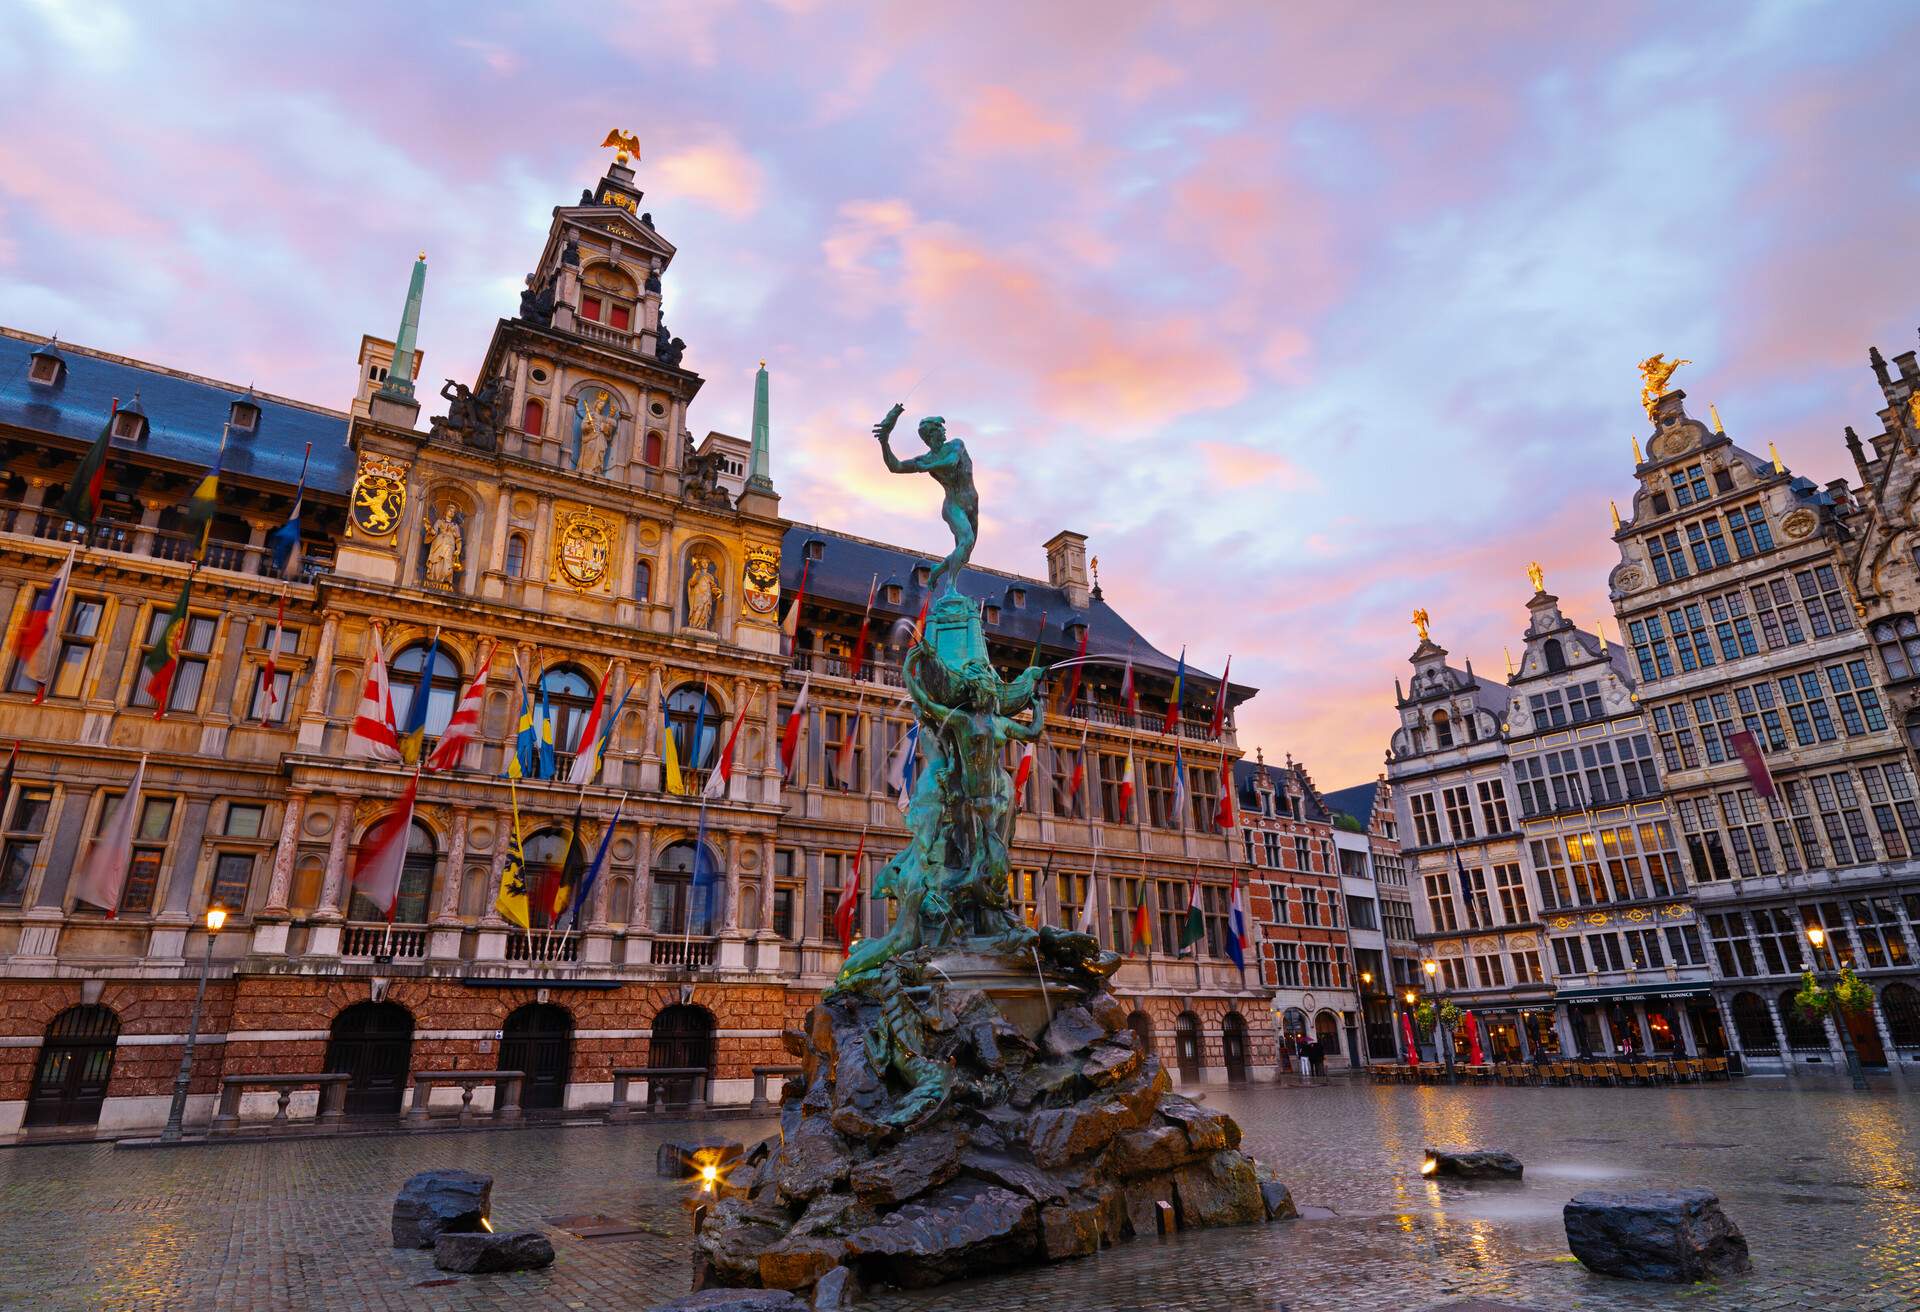 Brabo Fountain & City Hall, City Square, Antwerp, Belgium